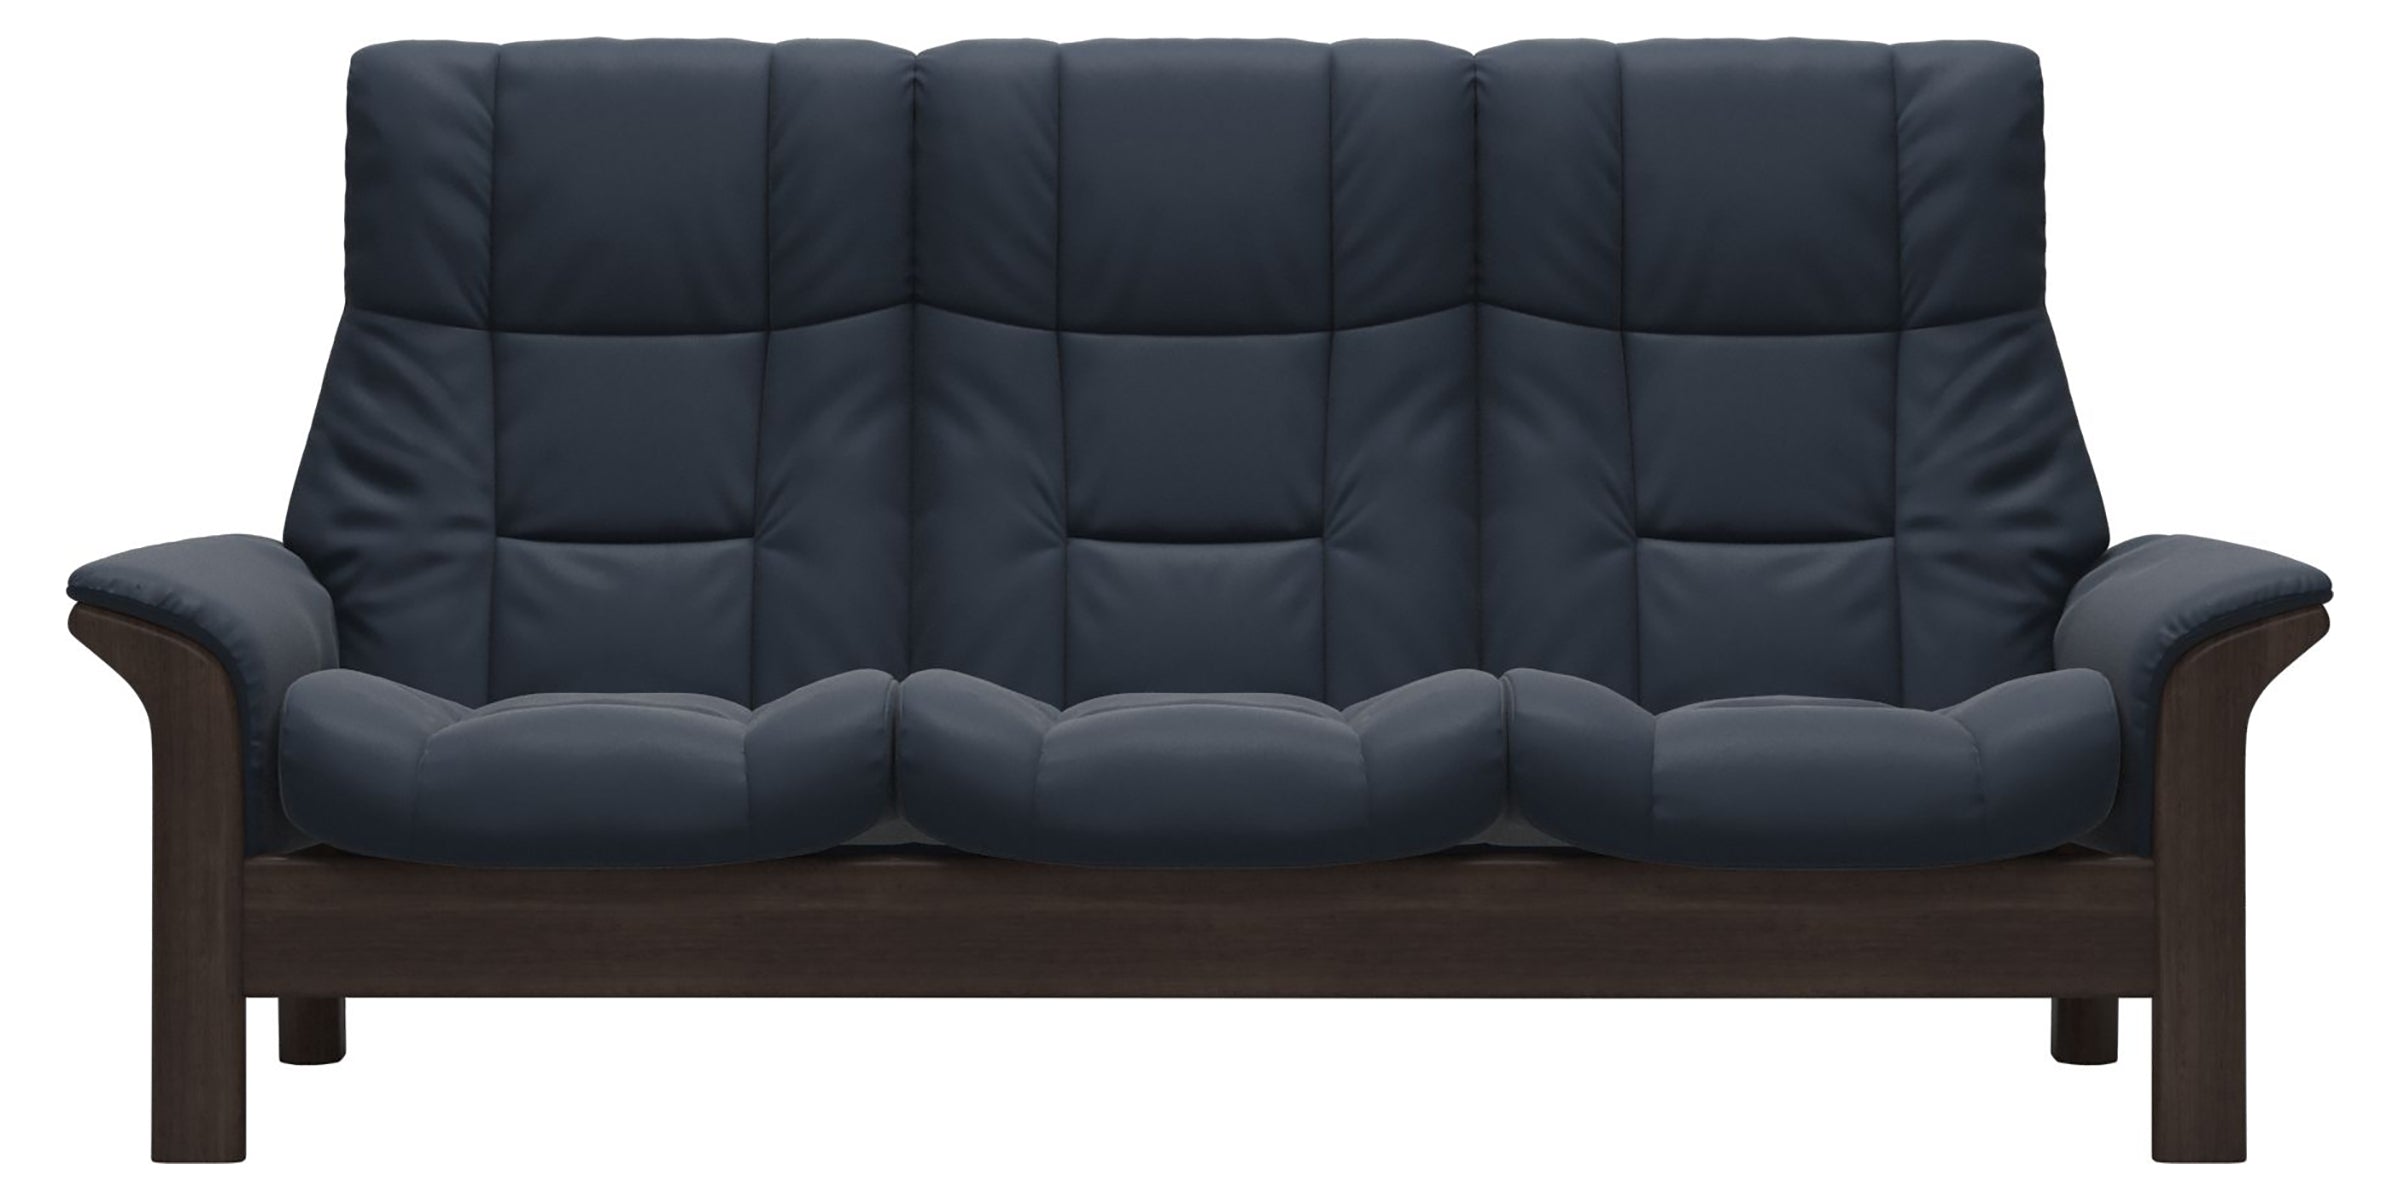 Paloma Leather Oxford Blue and Wenge Base | Stressless Windsor 3-Seater High Back Sofa | Valley Ridge Furniture